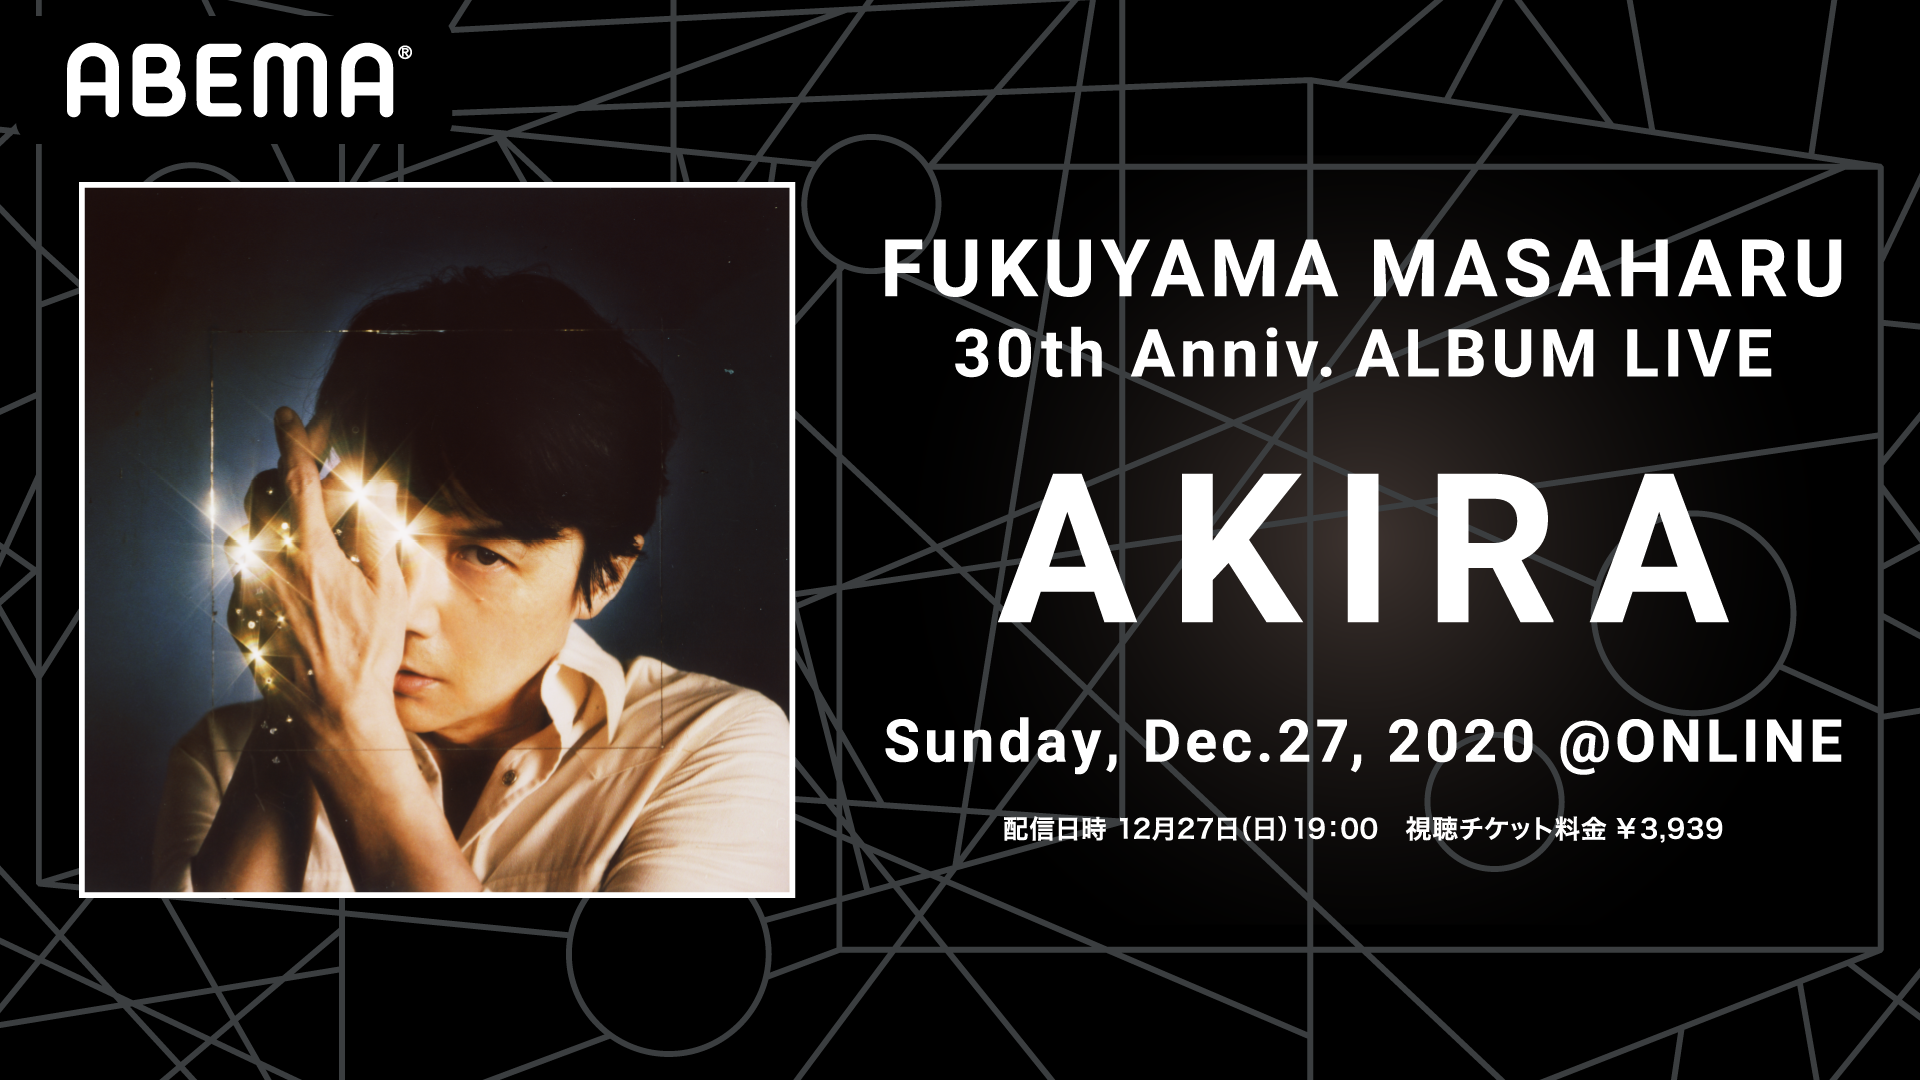 Fukuyama Masaharu 30th Anniv Album Live Akira 発売開始 Abema Ppv Online Live Abema